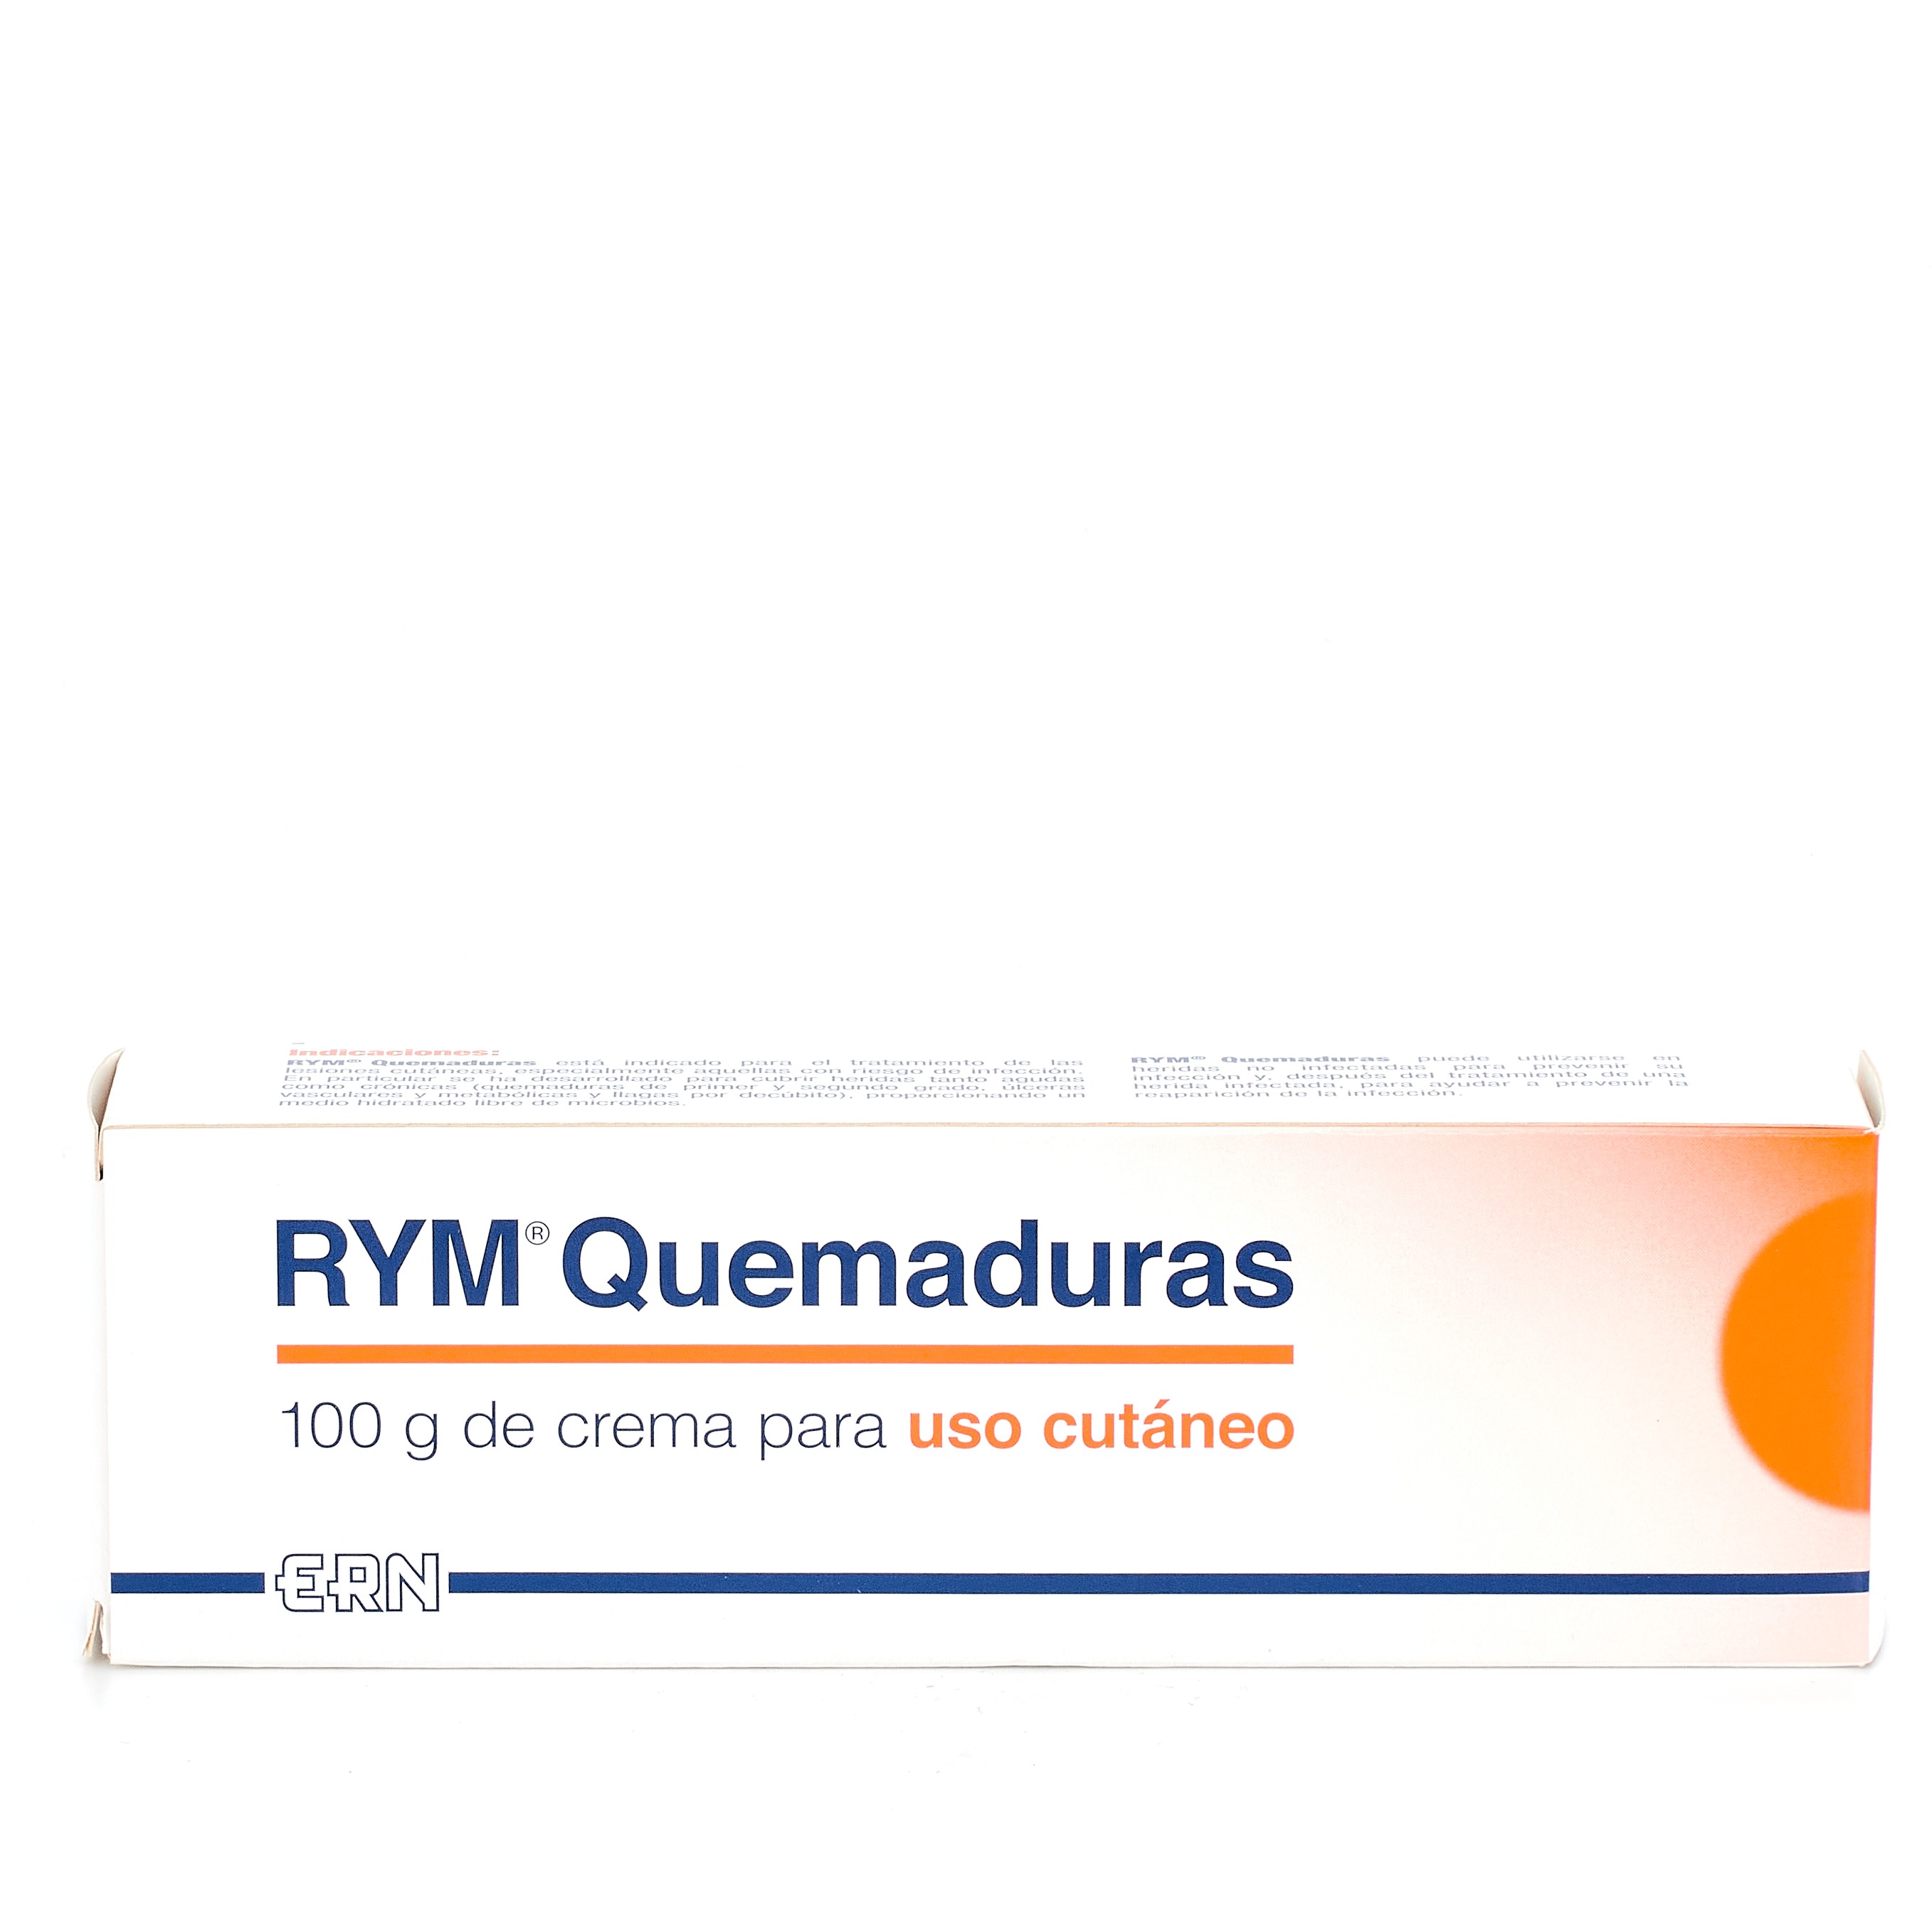 RYM QUEMADURAS 100 G